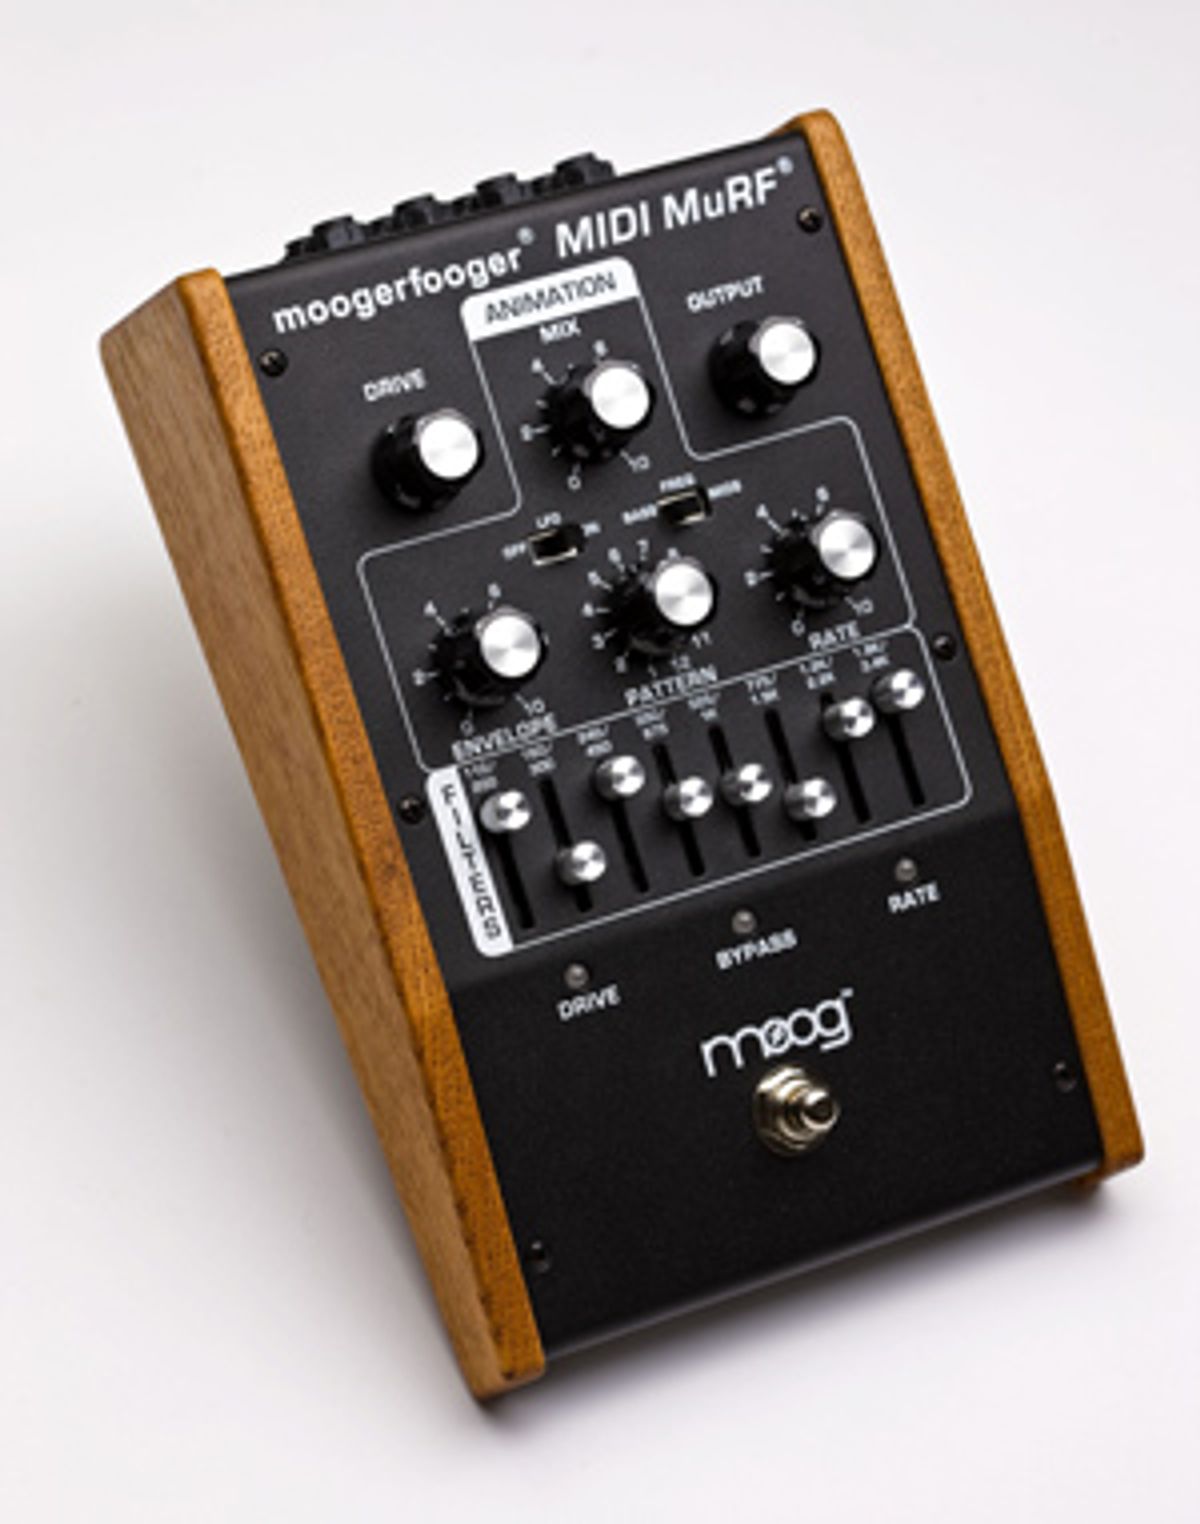 Moog Music launches the MF-105M MIDI MuRF